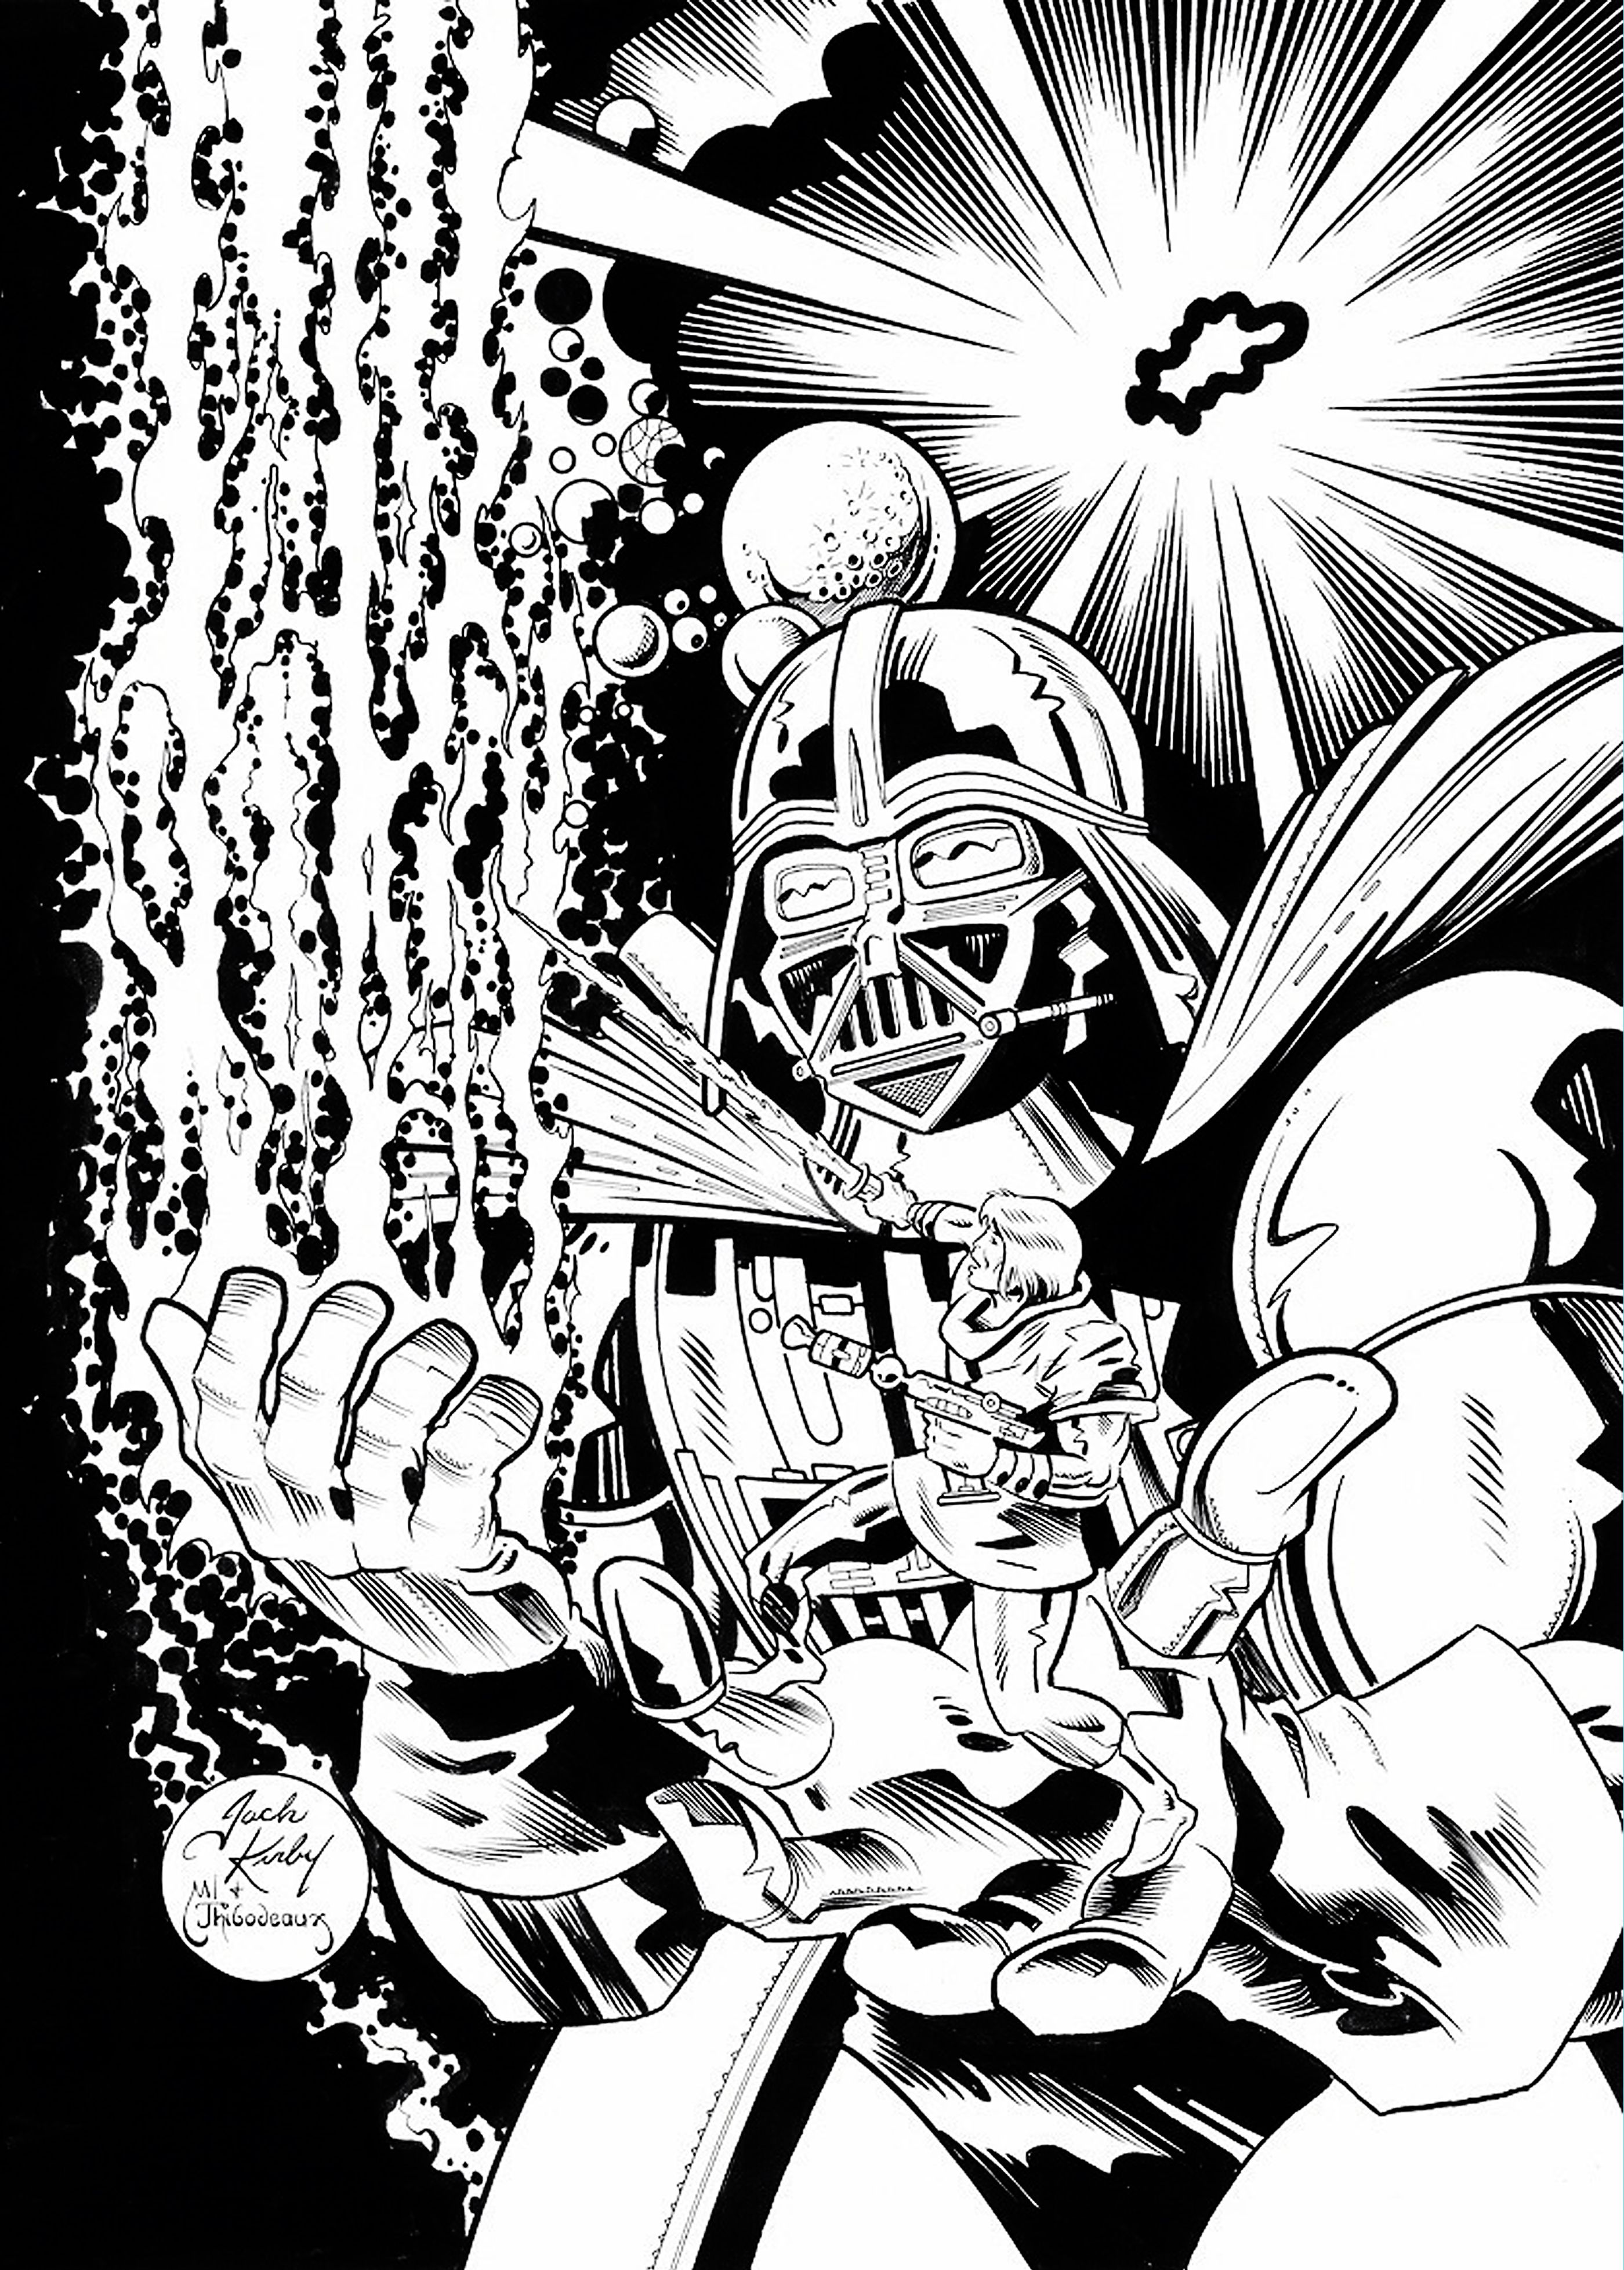 Darth Vader’s Force Powers Turn Cosmic in Jack Kirby Star Wars Art